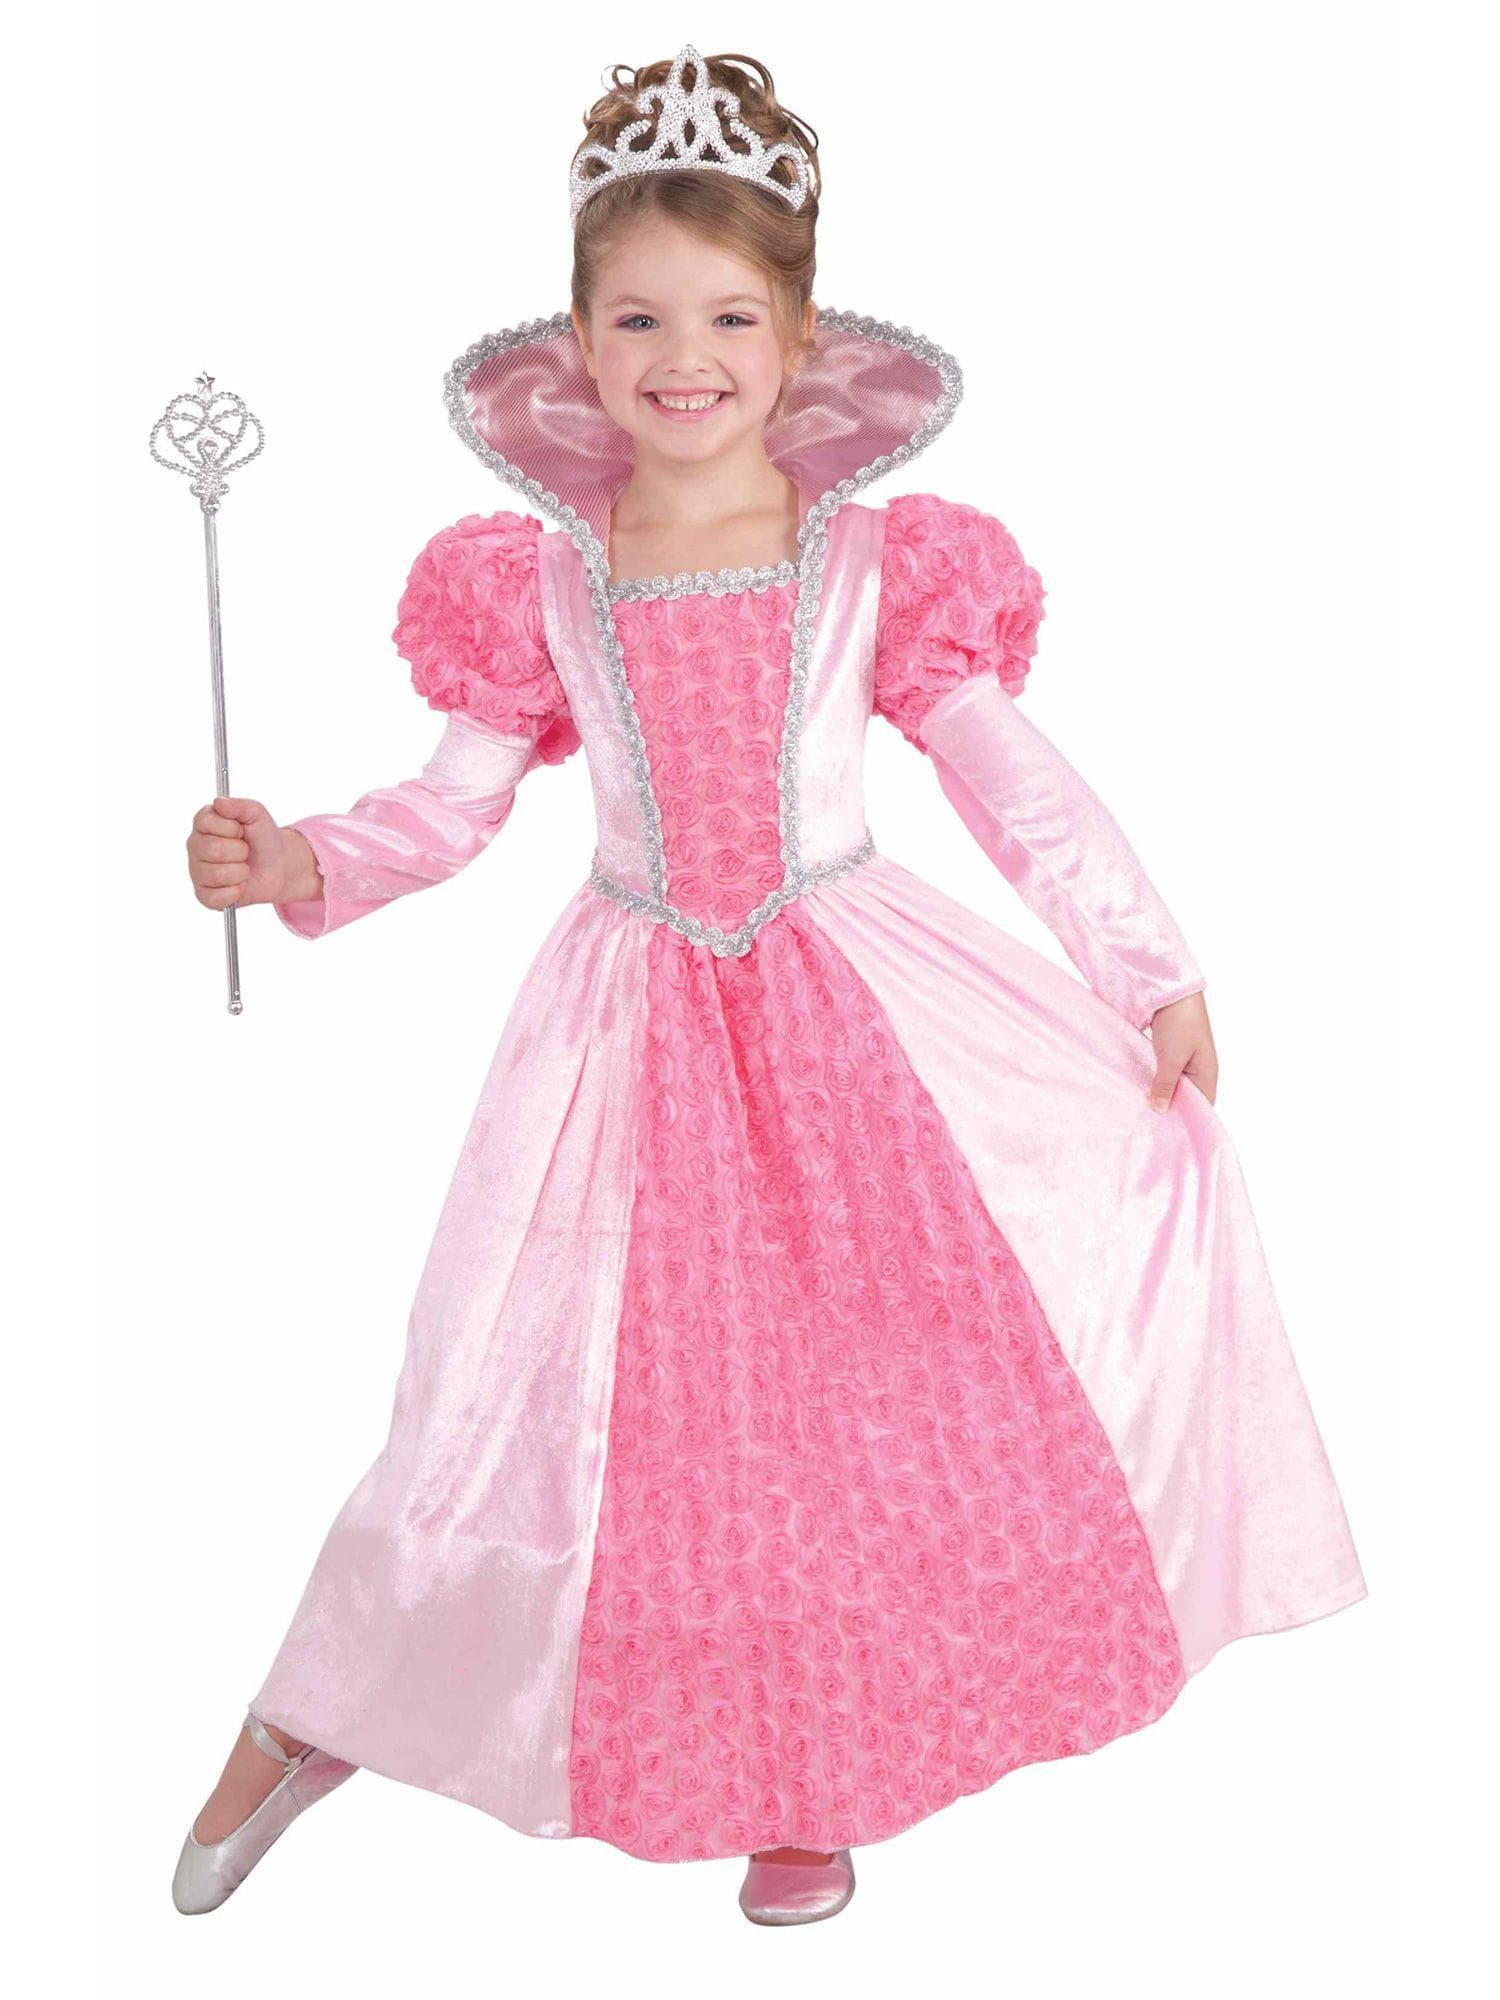 Kid's Princess Rose Costume - costumes.com